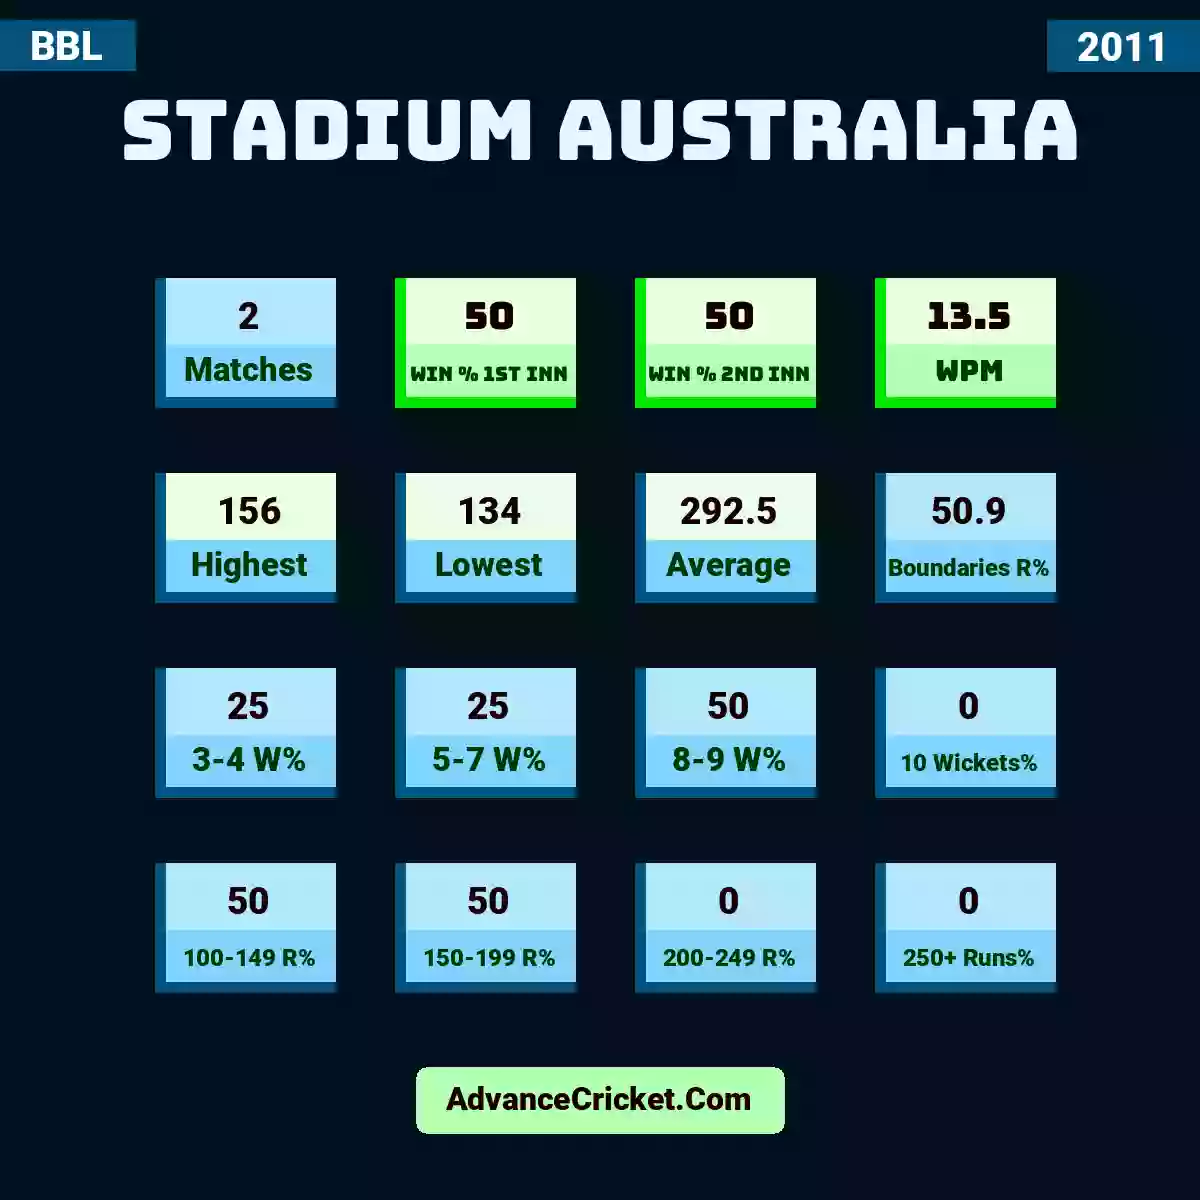 Image showing Stadium Australia with Matches: 2, Win % 1st Inn: 50, Win % 2nd Inn: 50, WPM: 13.5, Highest: 156, Lowest: 134, Average: 292.5, Boundaries R%: 50.9, 3-4 W%: 25, 5-7 W%: 25, 8-9 W%: 50, 10 Wickets%: 0, 100-149 R%: 50, 150-199 R%: 50, 200-249 R%: 0, 250+ Runs%: 0.